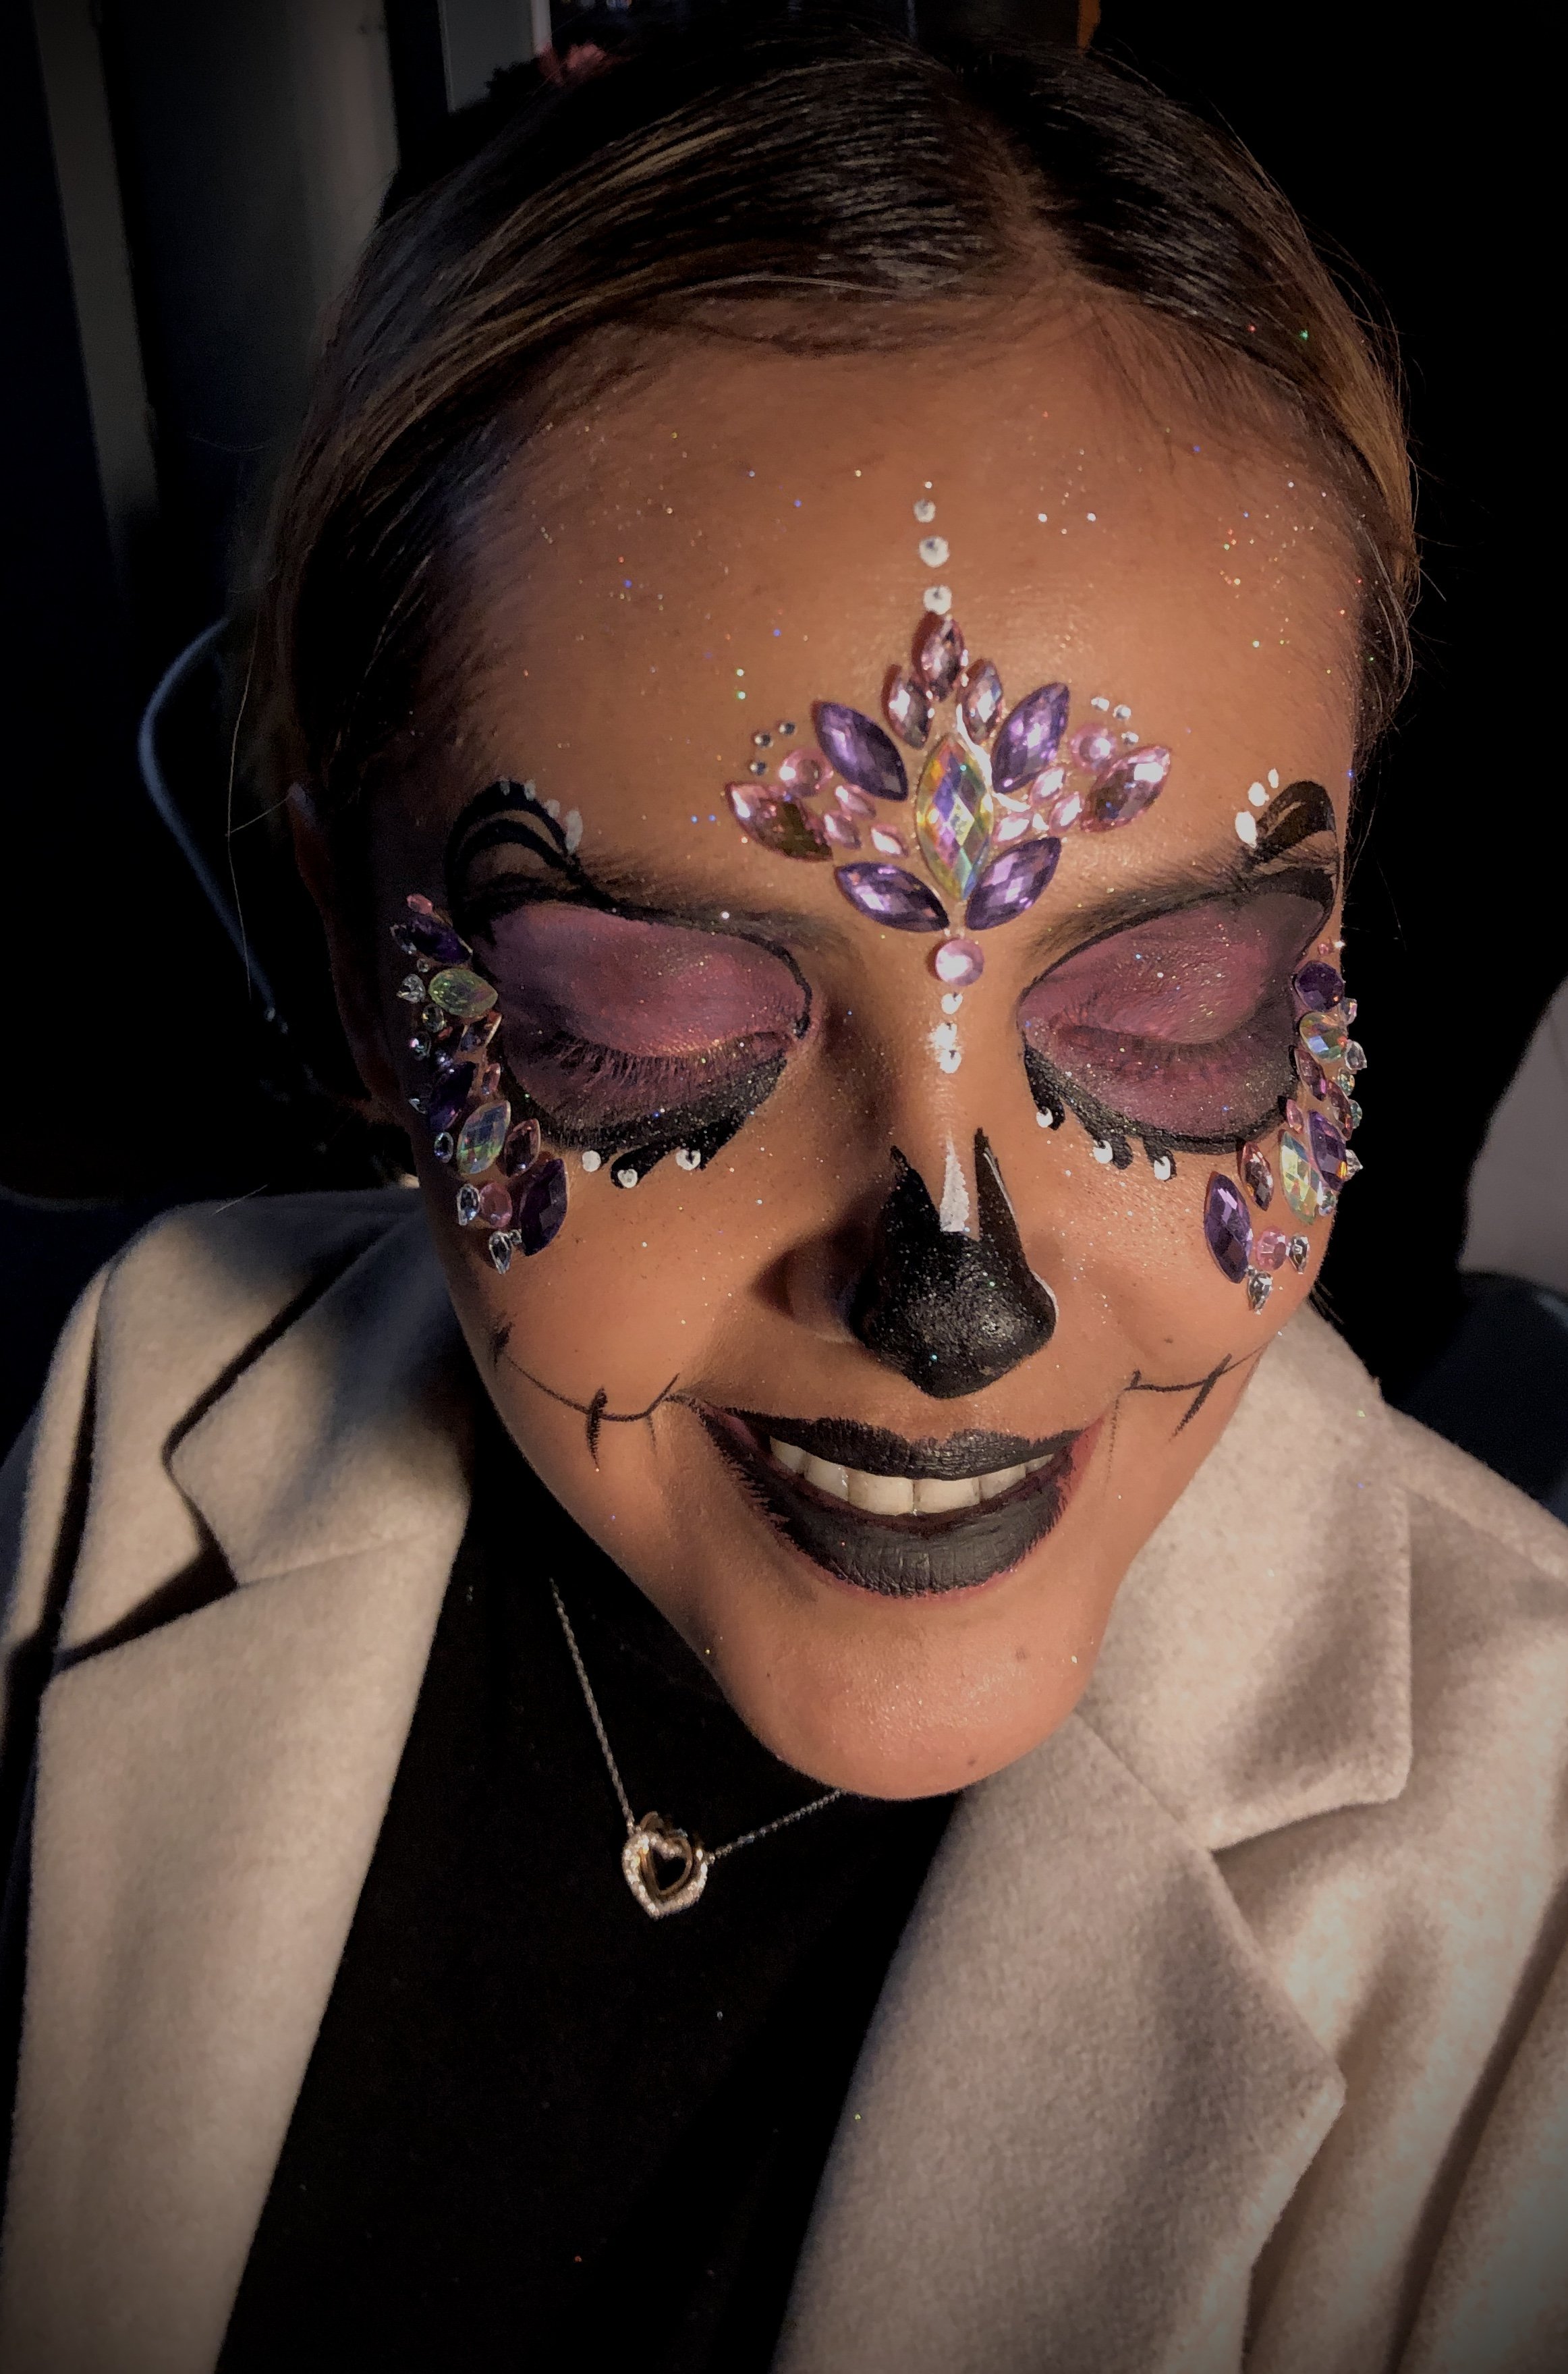 Halloween Sugar Skull Make Up New York City Face Painting Make Up Artist NYC.JPG